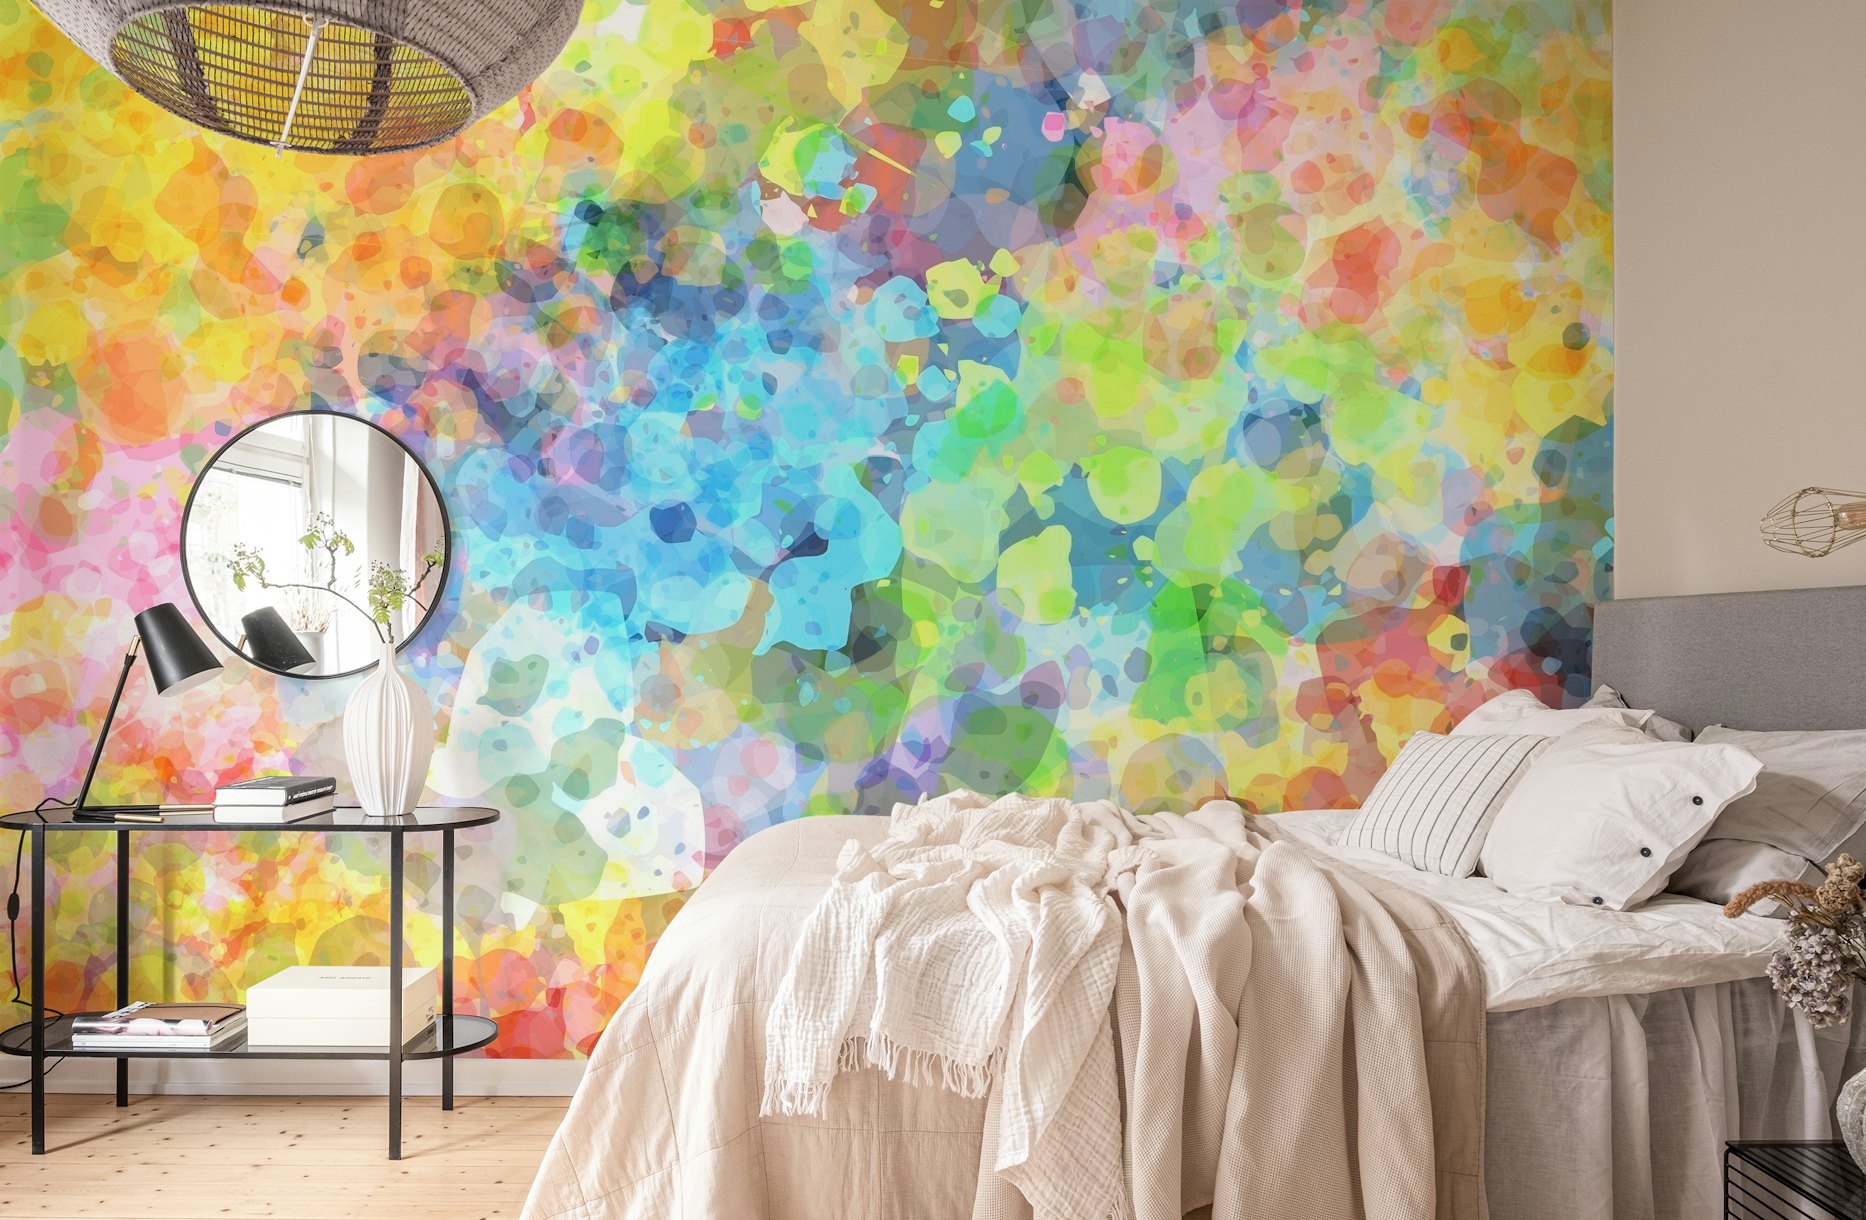 Spring Paint Love wallpaper